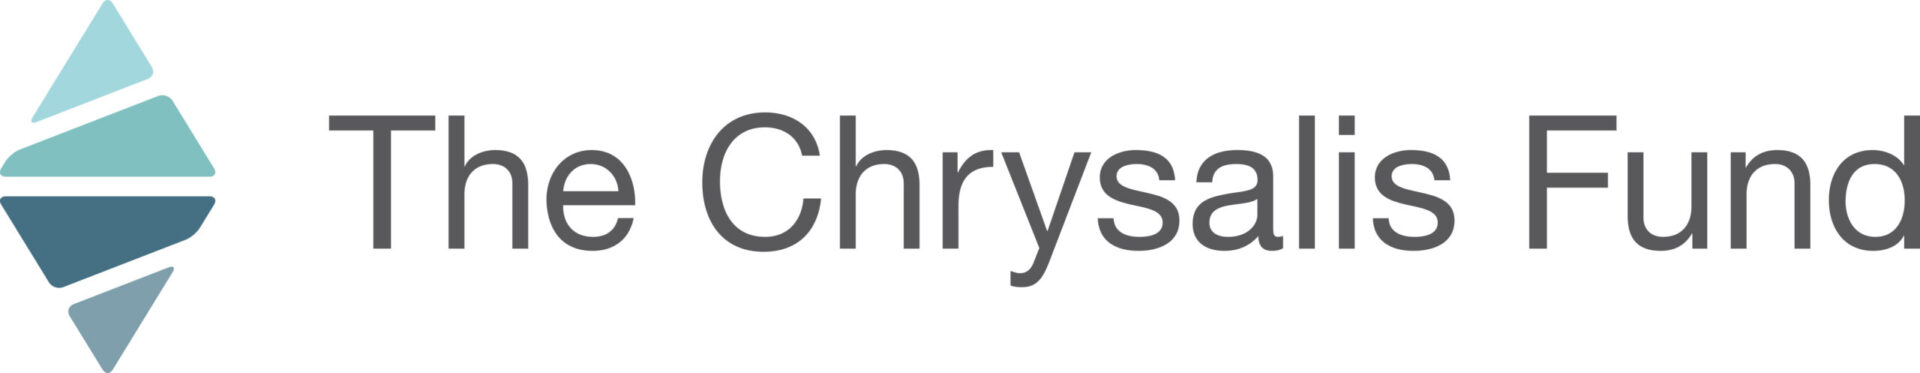 The Chrysalis Fund Logo 2